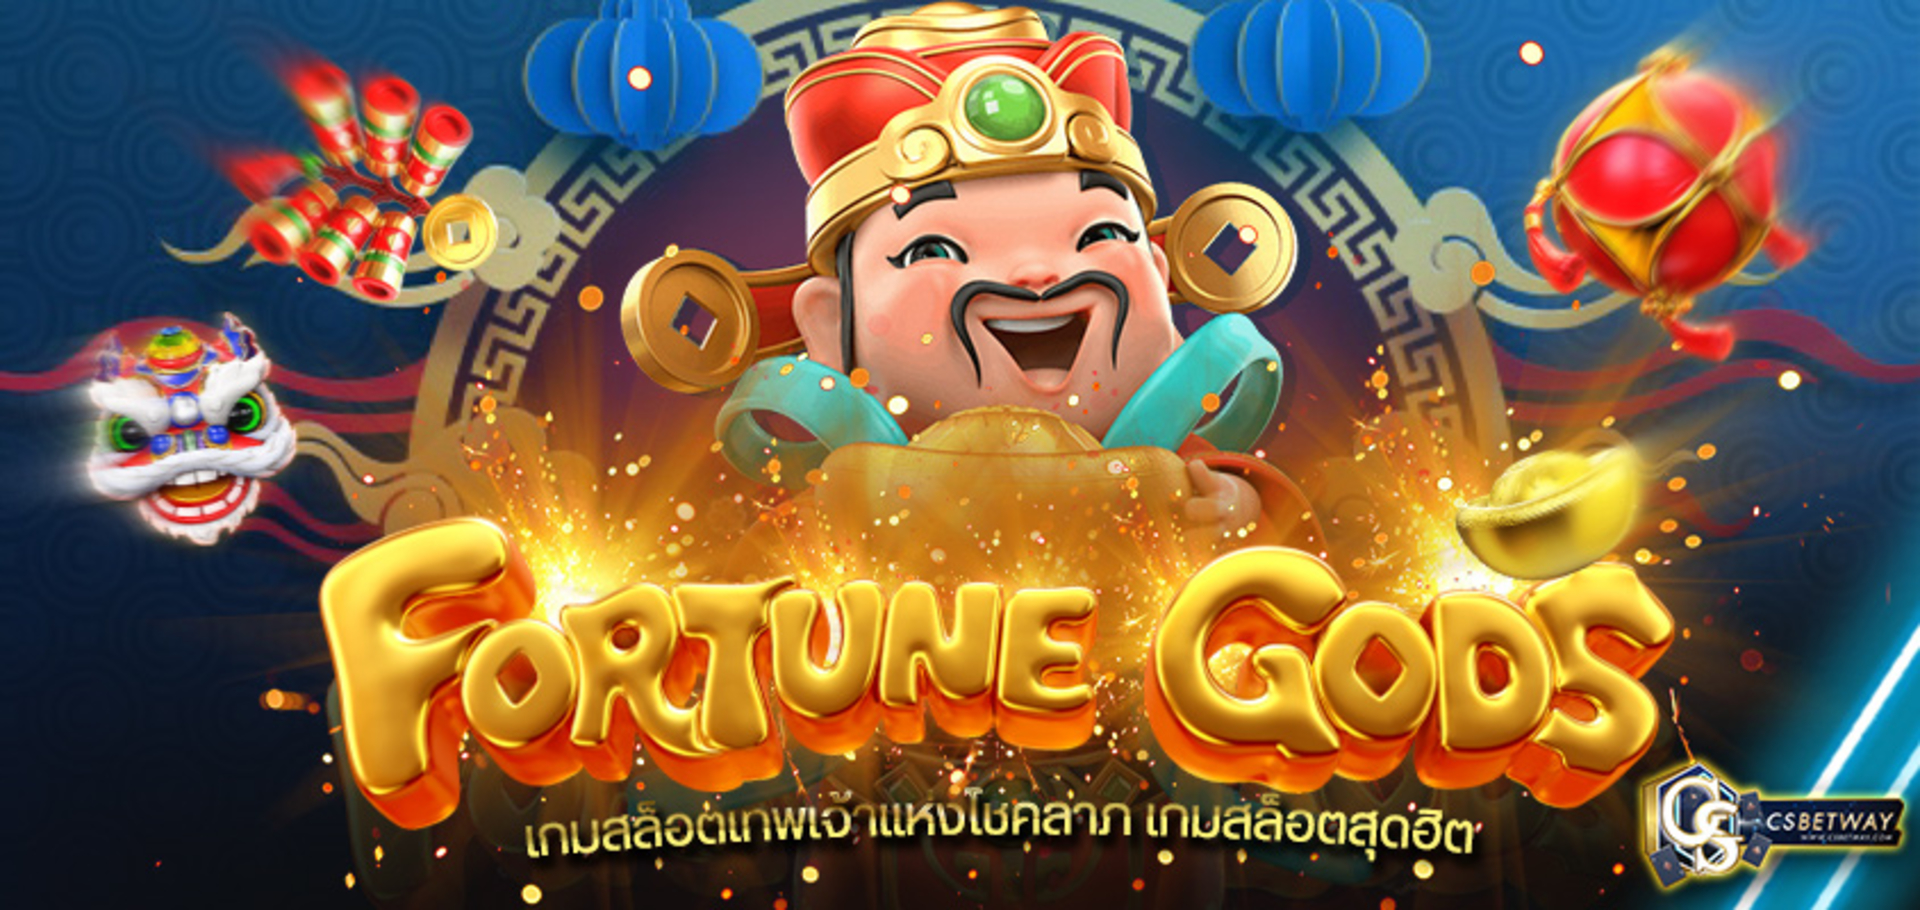 Fortune Gods เกมสล็อตเทพแห่งโชคลาภ เกมสล็อตสุดฮิต จากค่ายสล็อตพีจี PG Slot ทดลองเล่นฟรีเว็บเกมสล็อตออนไลน์ เล่นง่าย จ่ายจริง